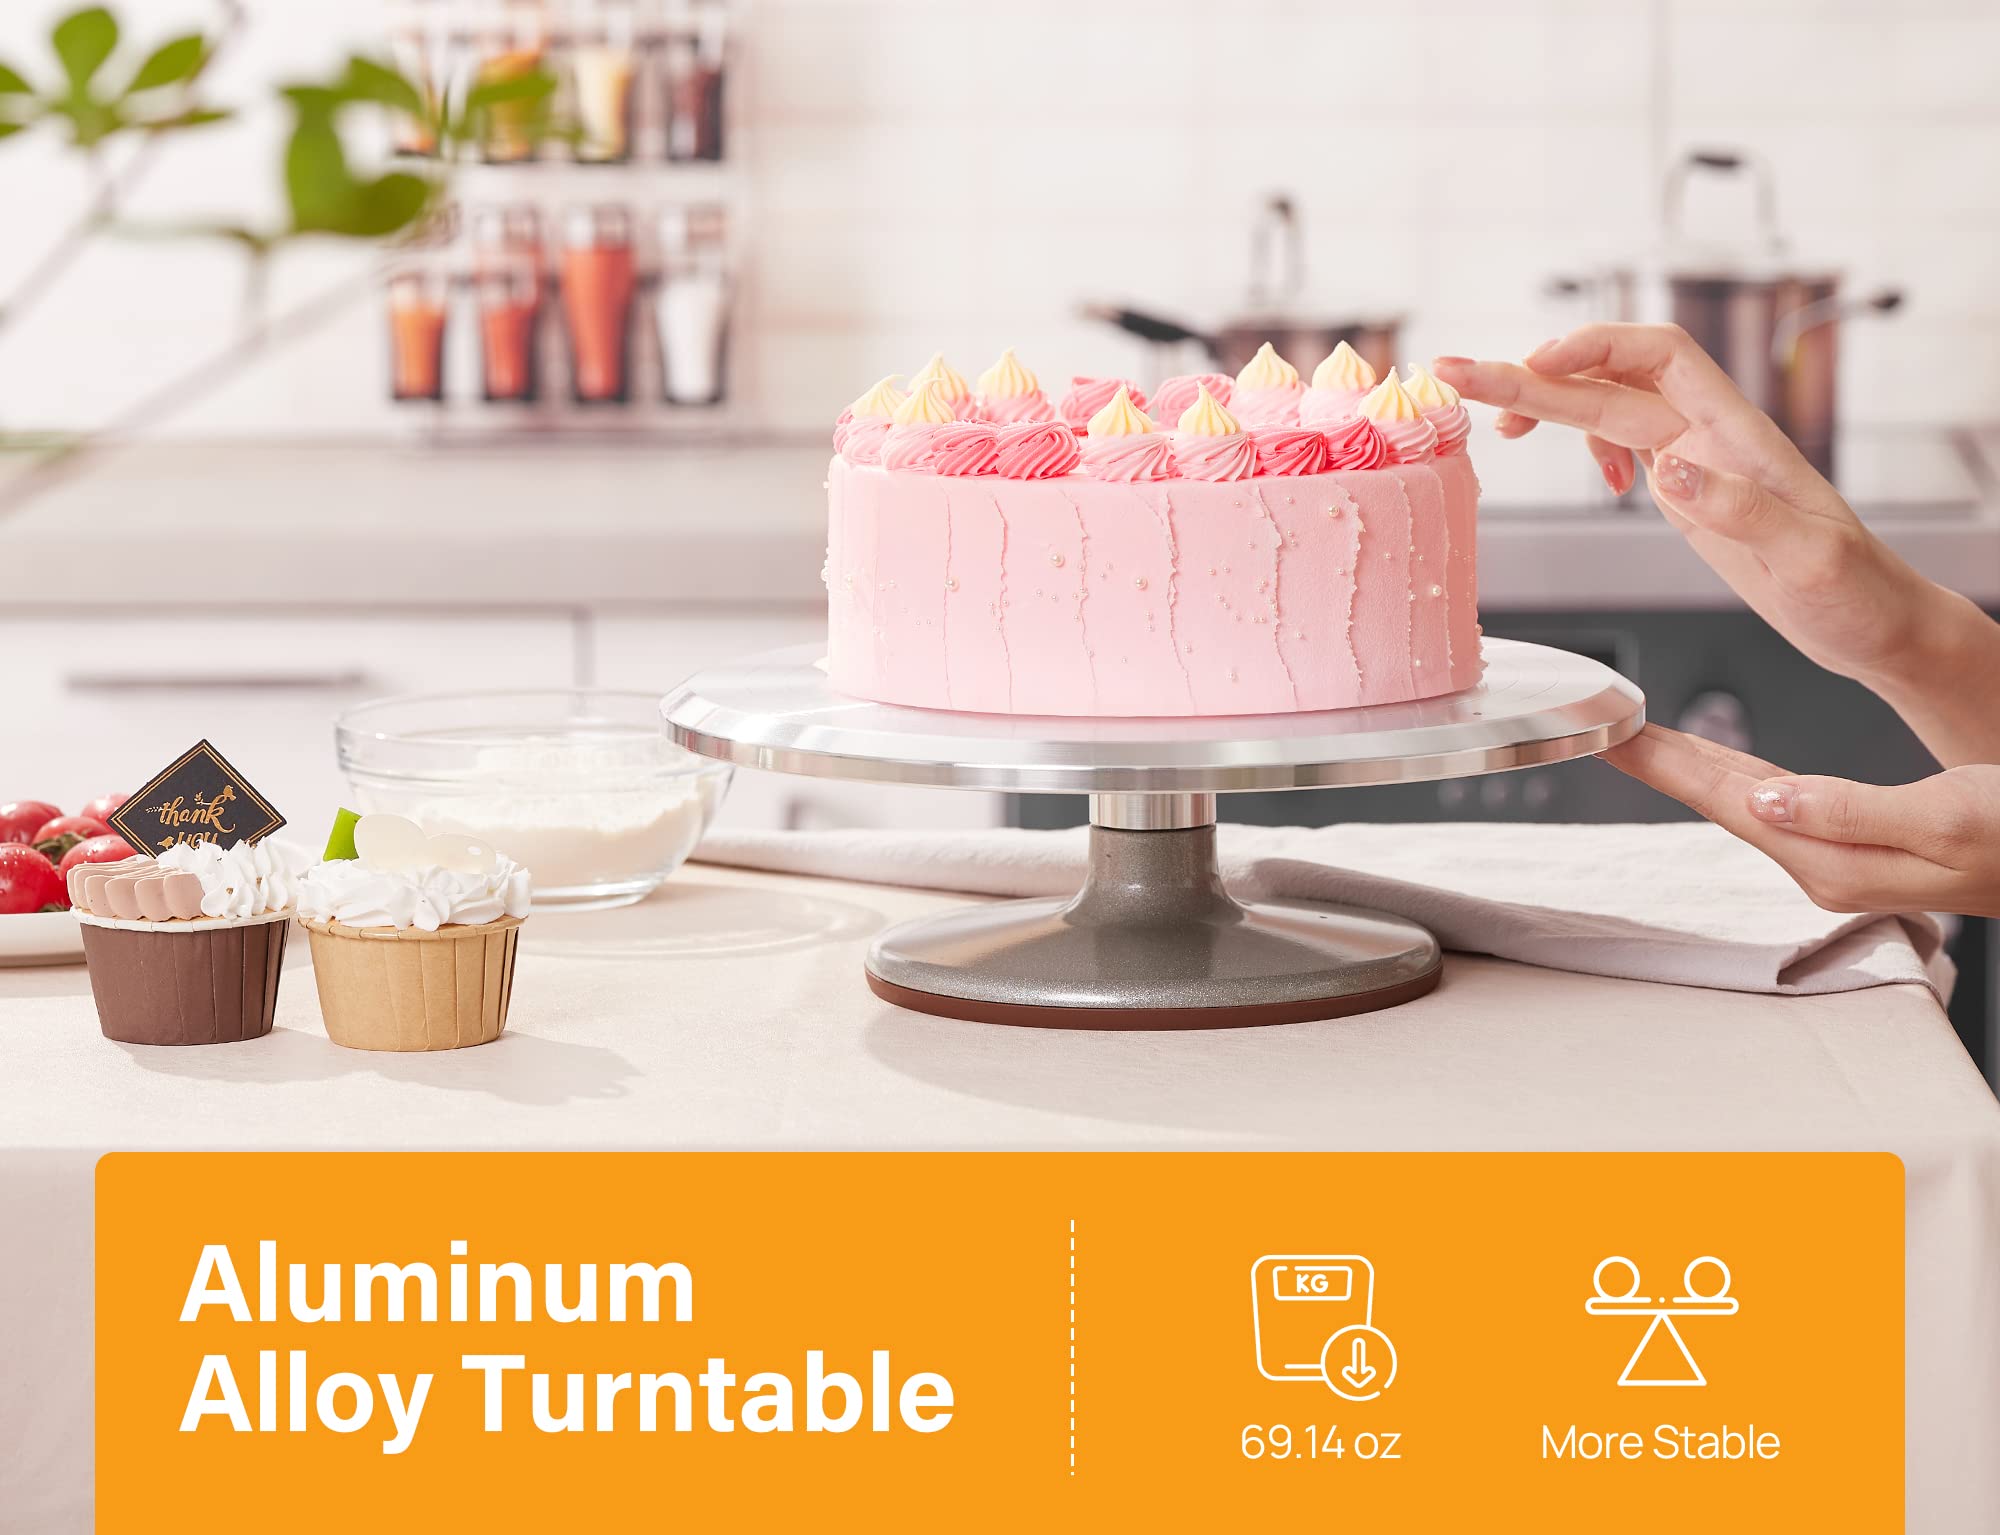 8-12 Inch High-Quality Cake Turntable Platform Aluminum Alloy Rotating  Baking St | eBay